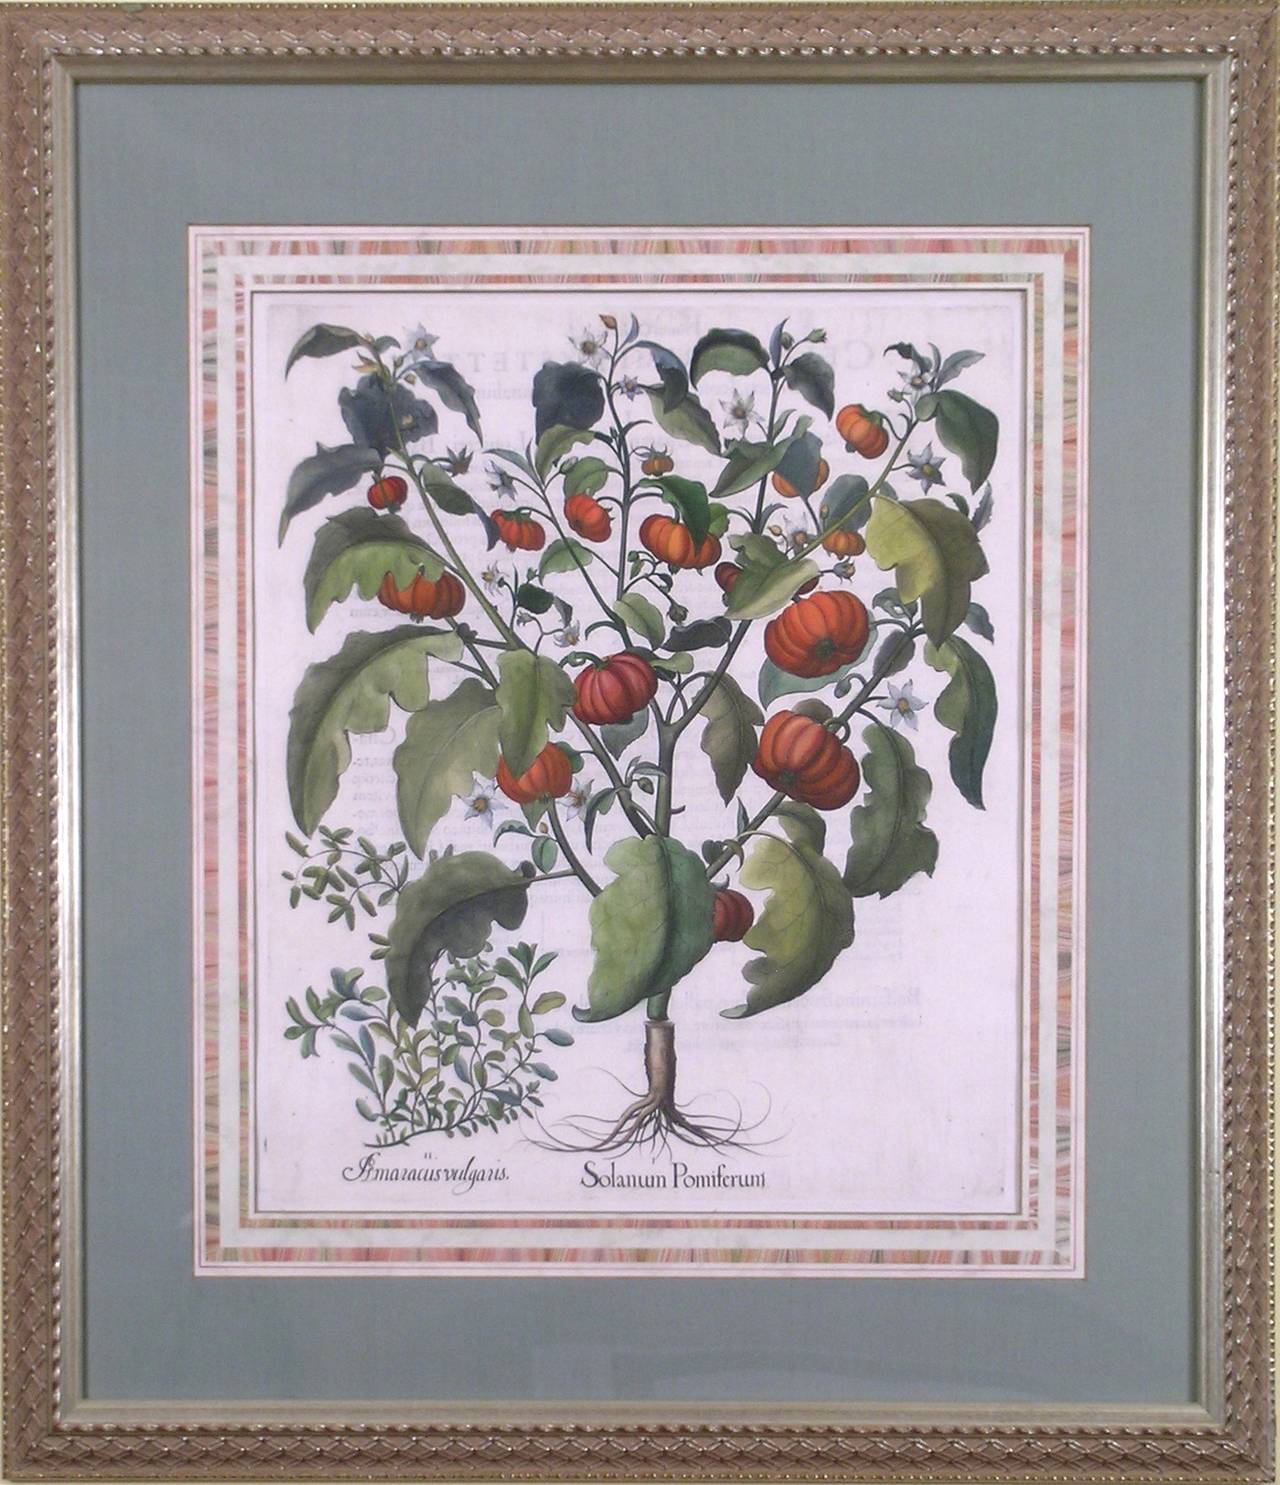 Solanum Pomiferum Tomato Vegetable - Print by Basilius Besler